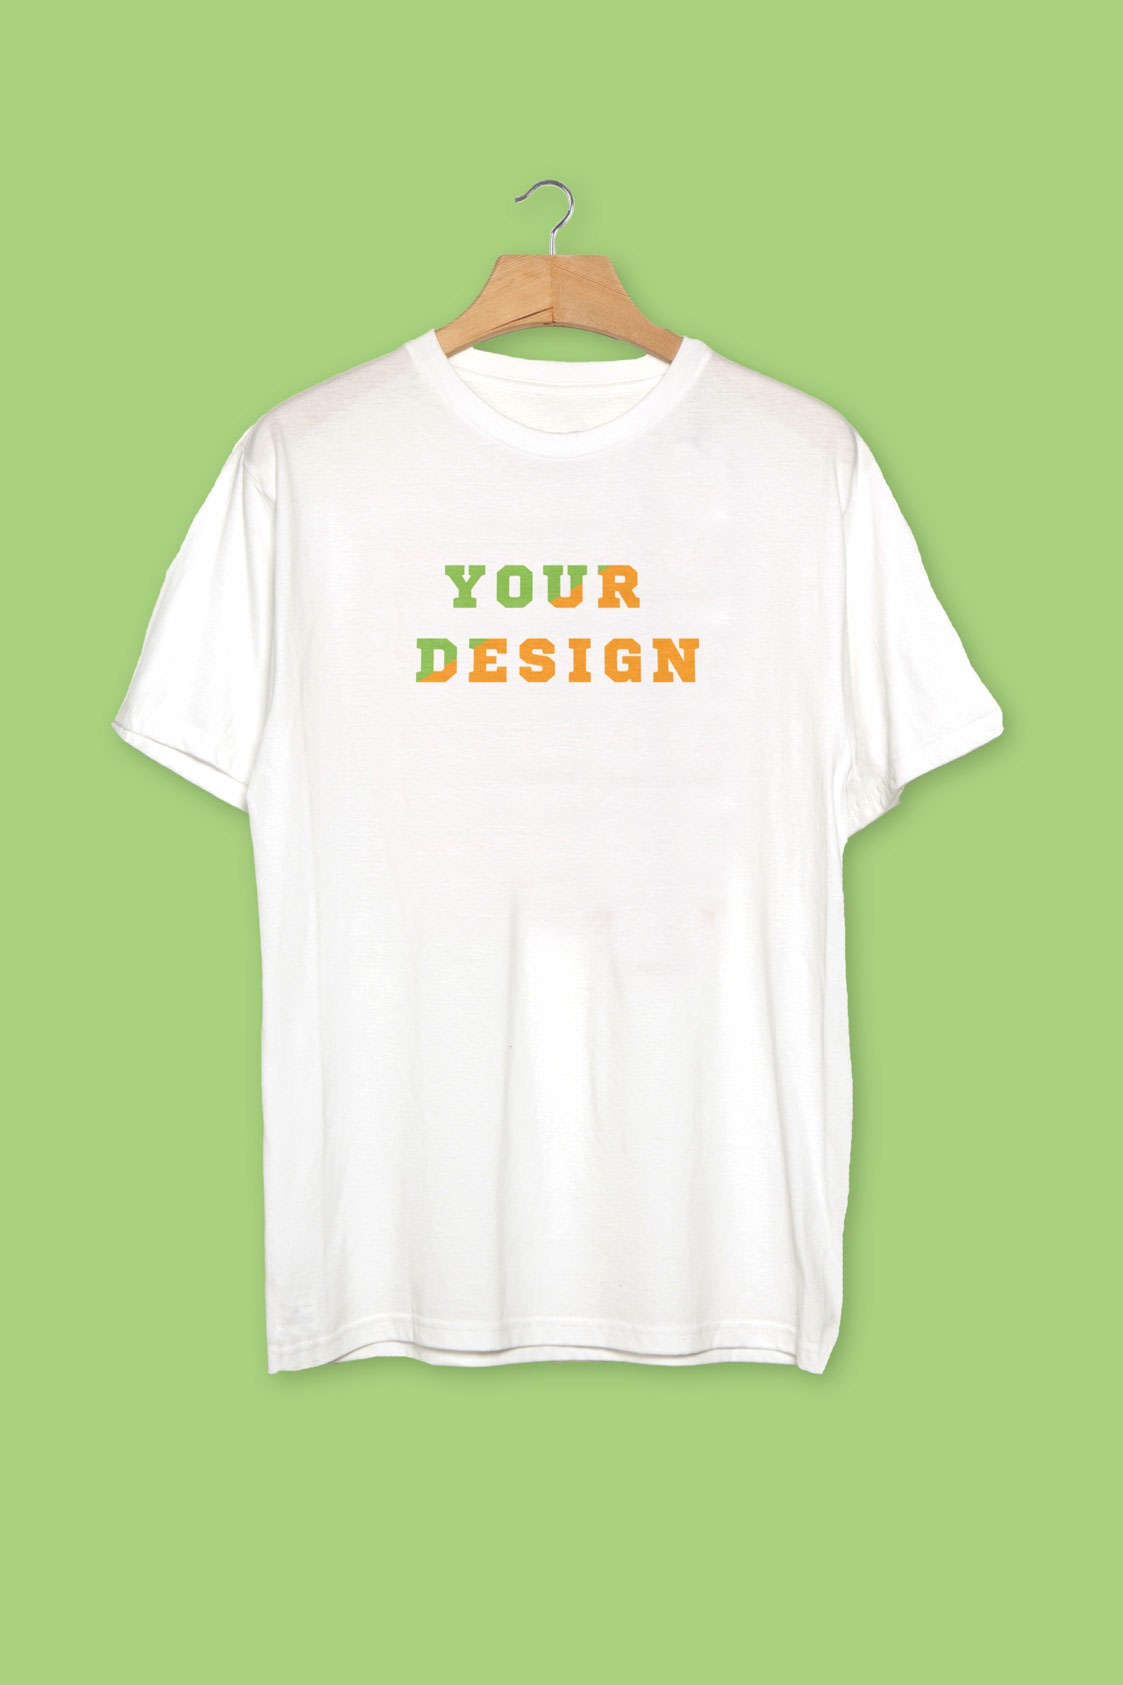 Download Mockup T Shirt Gym Free : Premium PSD | White t-shirts mockup on grey : All sample graphics you ...